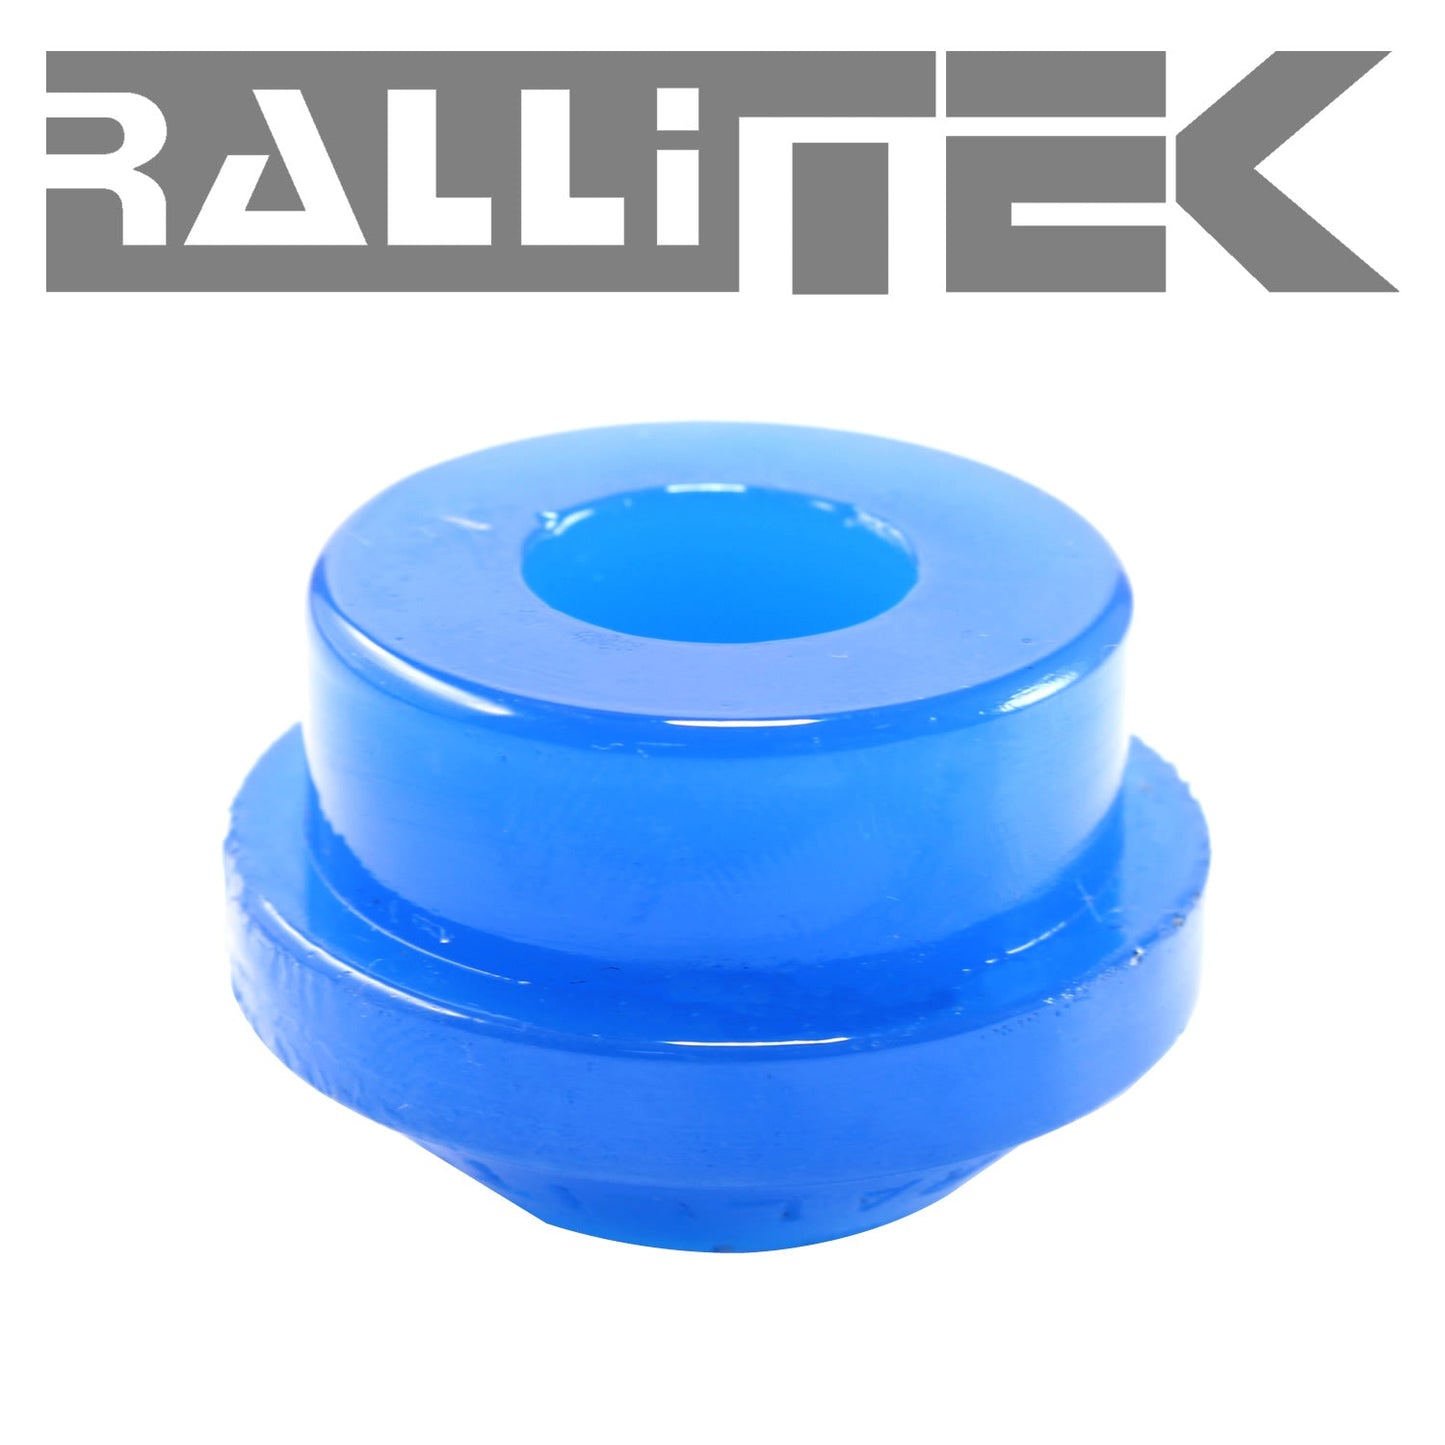 RalliTEK HD Rear Endlinks Replacement Bushing Kit (RTEK-113156) - BRZ 2013-2017 / FR-S 2013-2016 / WRX & STI 2008-2017 / More